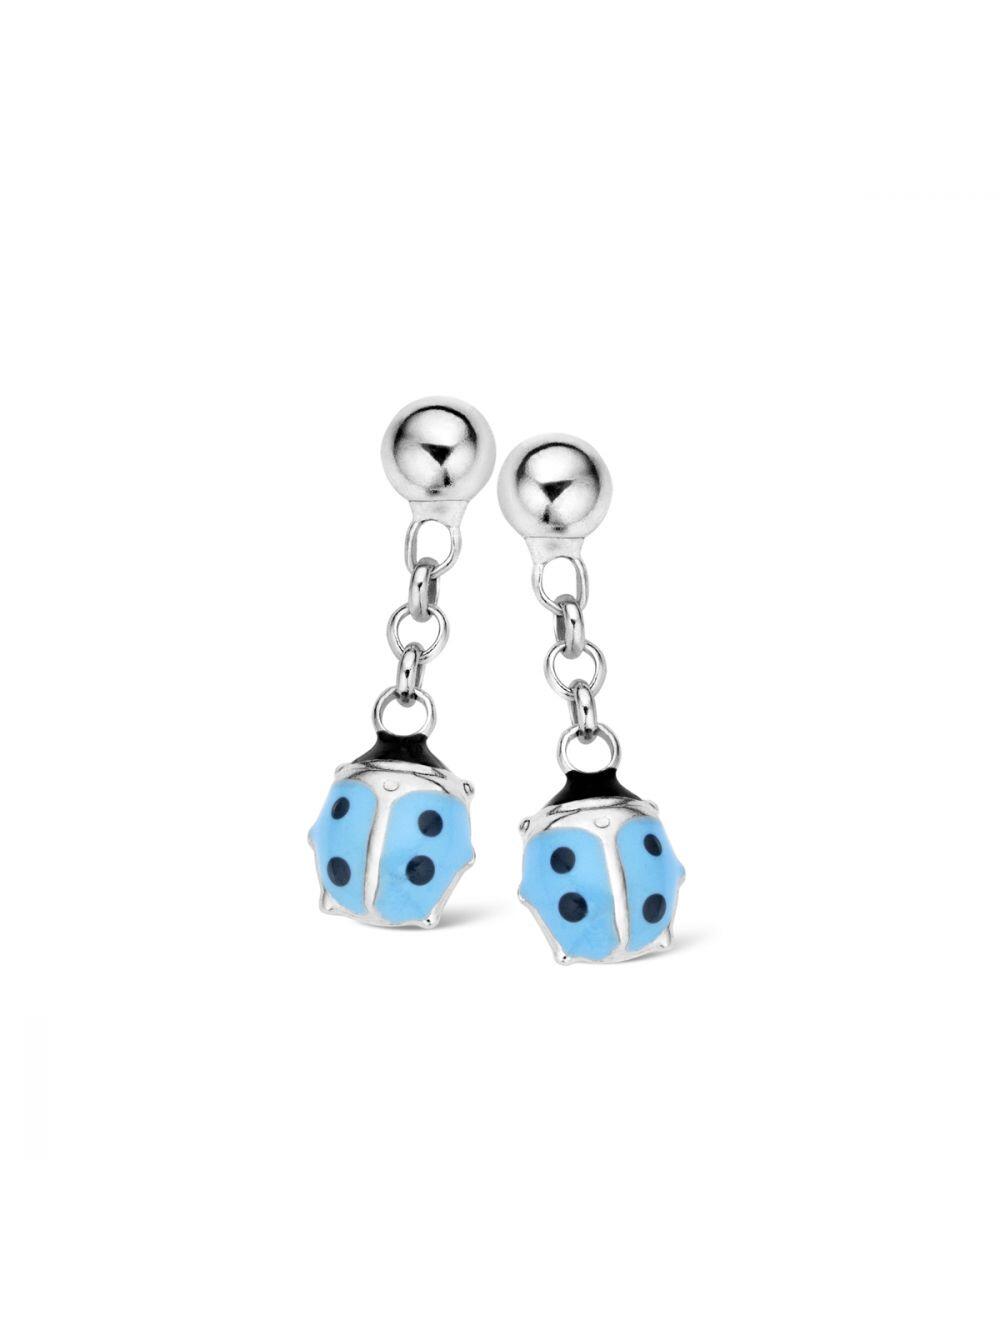 Blue ladybug earrings pendant